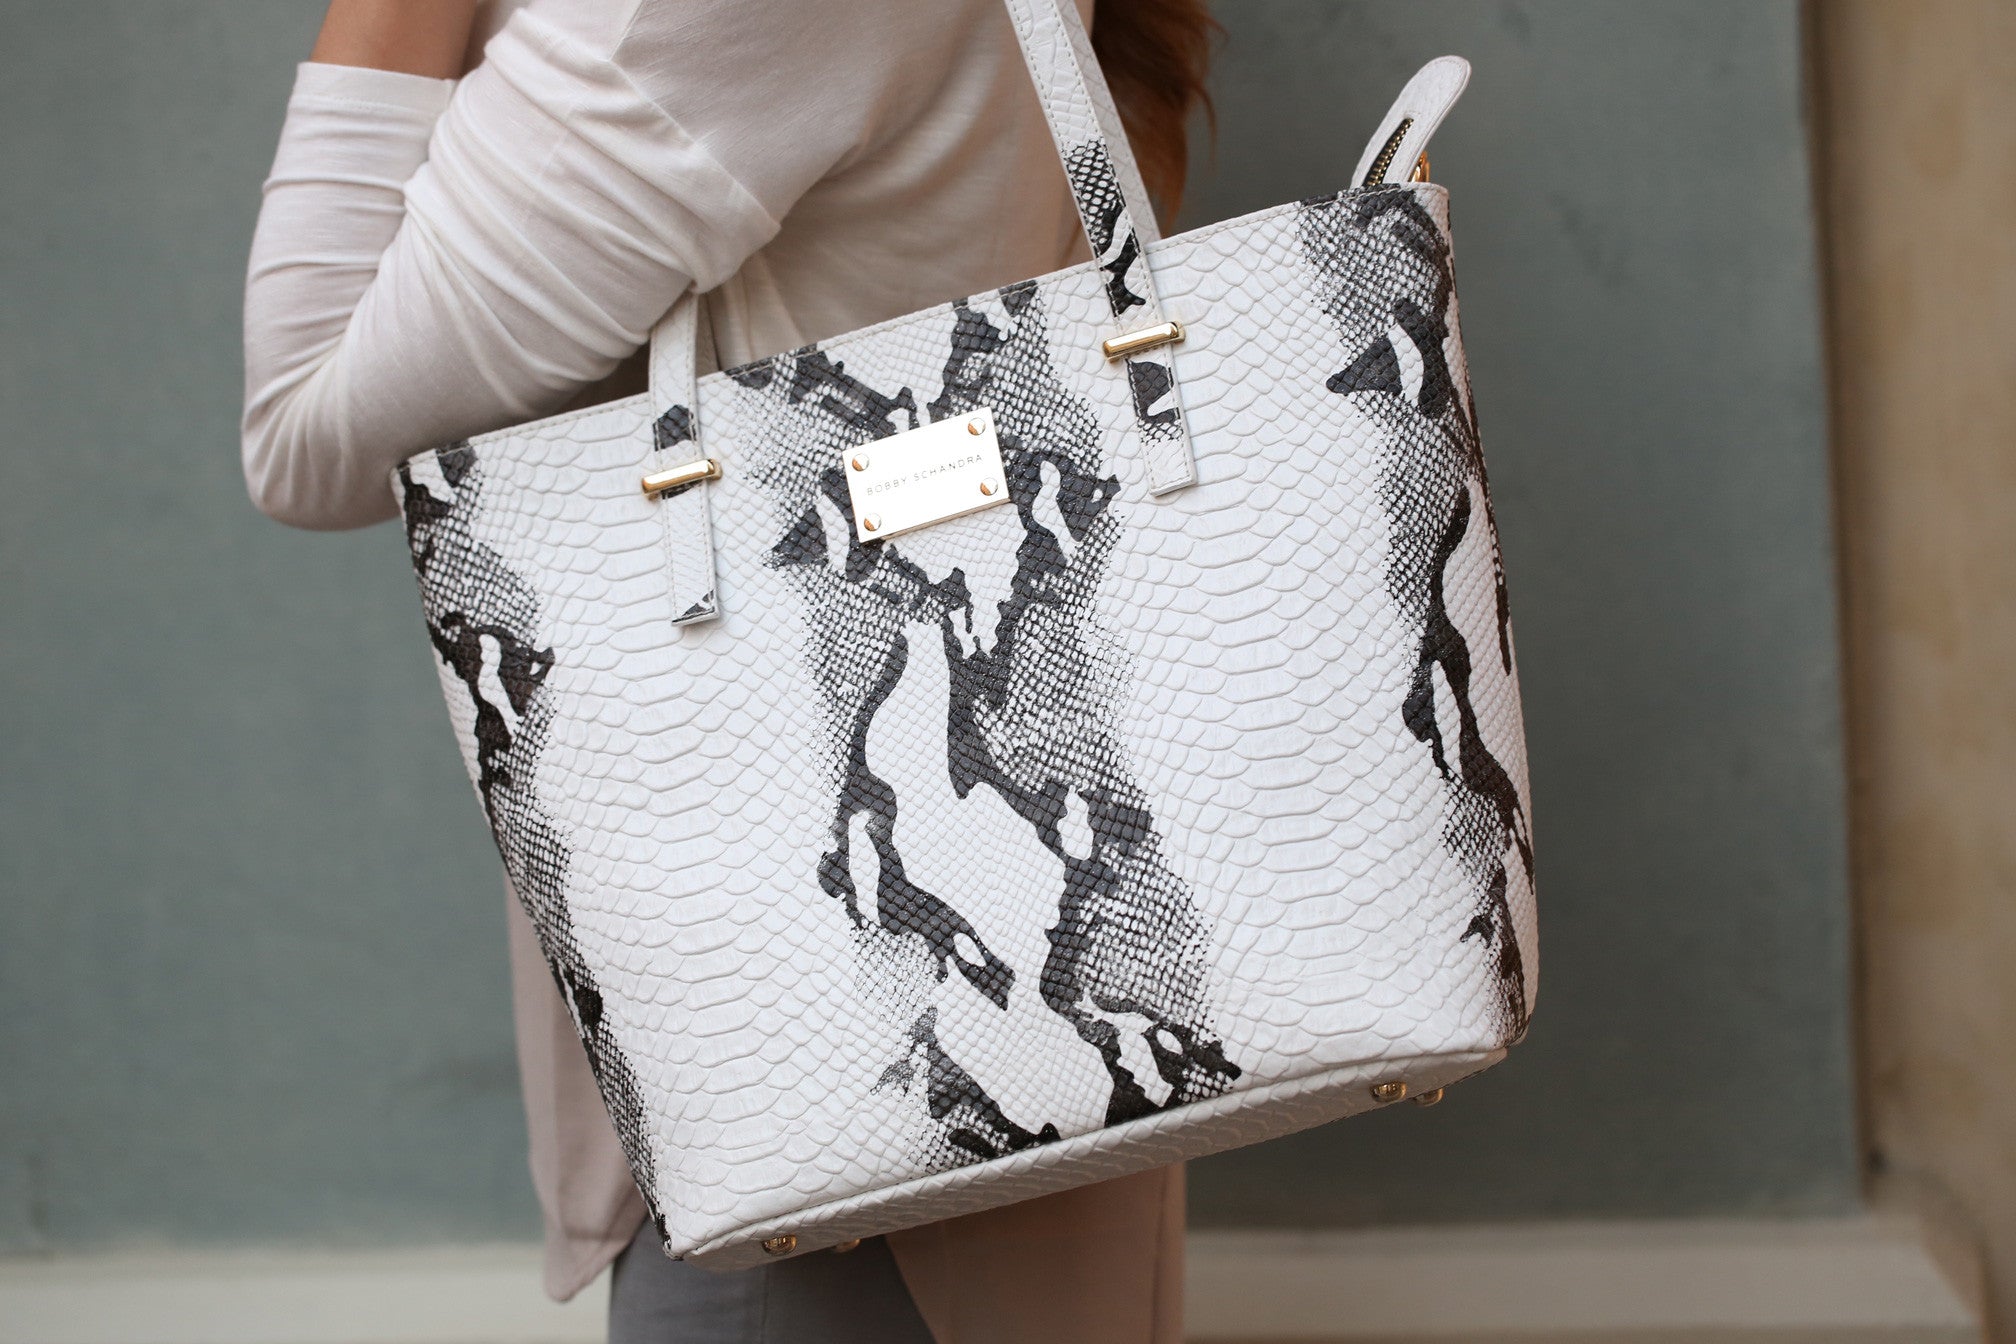 Designer Leather Tote Handbag: Black & White by Bobby Schandra